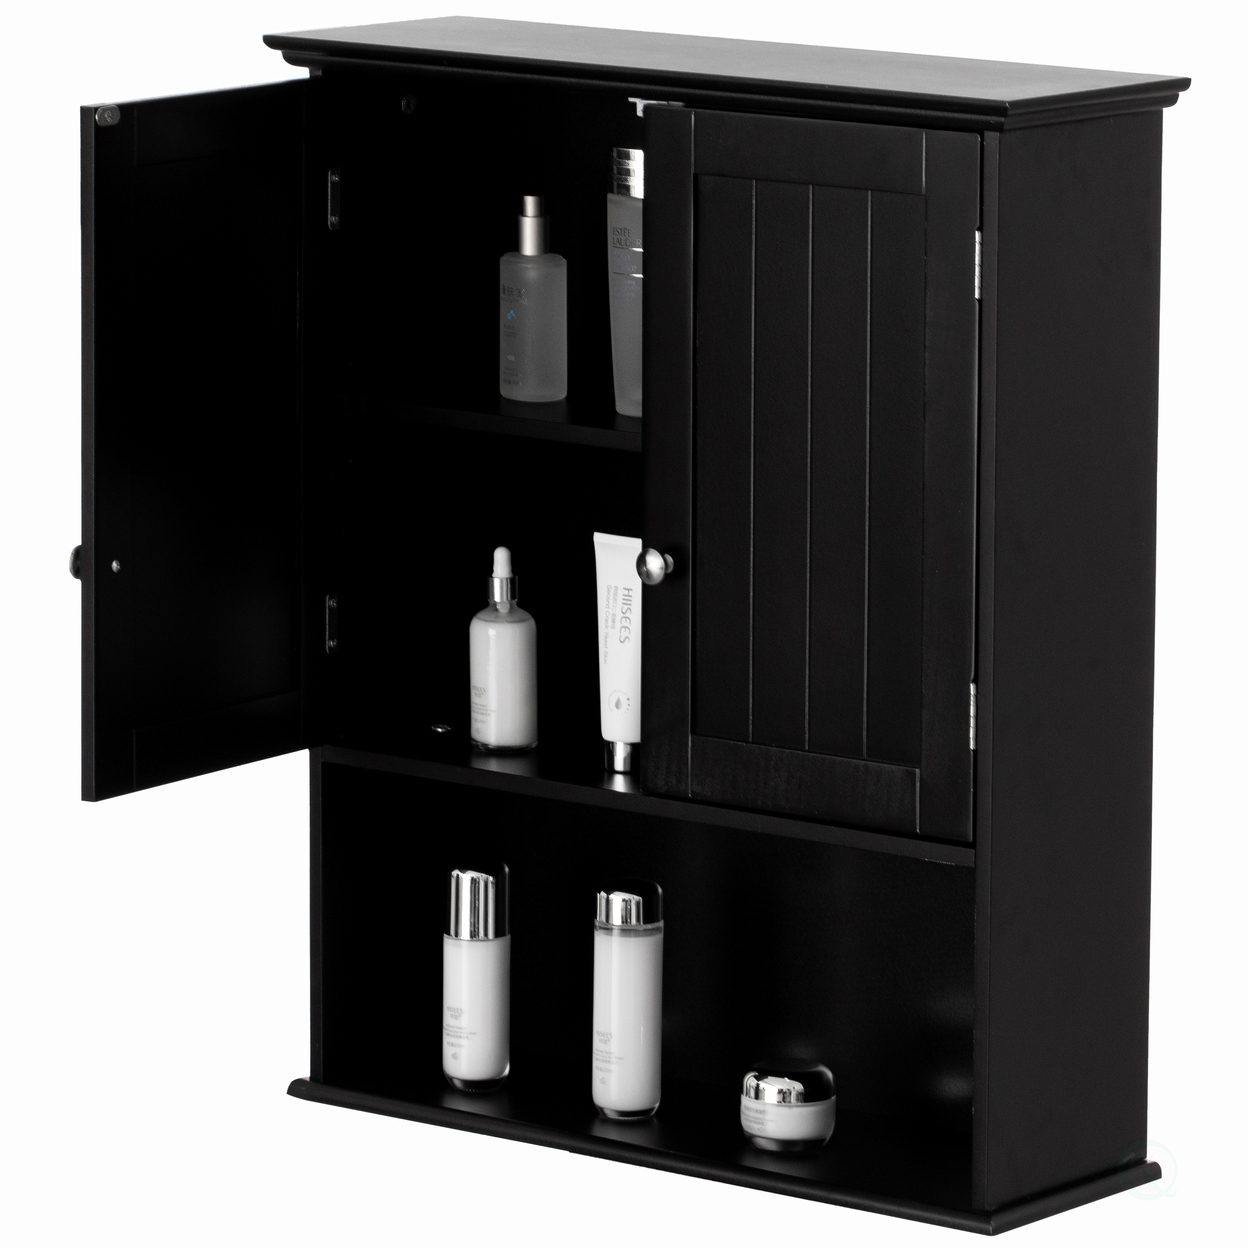 Wall Mount Bathroom Cabinet Wooden Medicine Cabinet Storage Organizer Double Door With 2 Shelves, And Open Display Shelf - Black